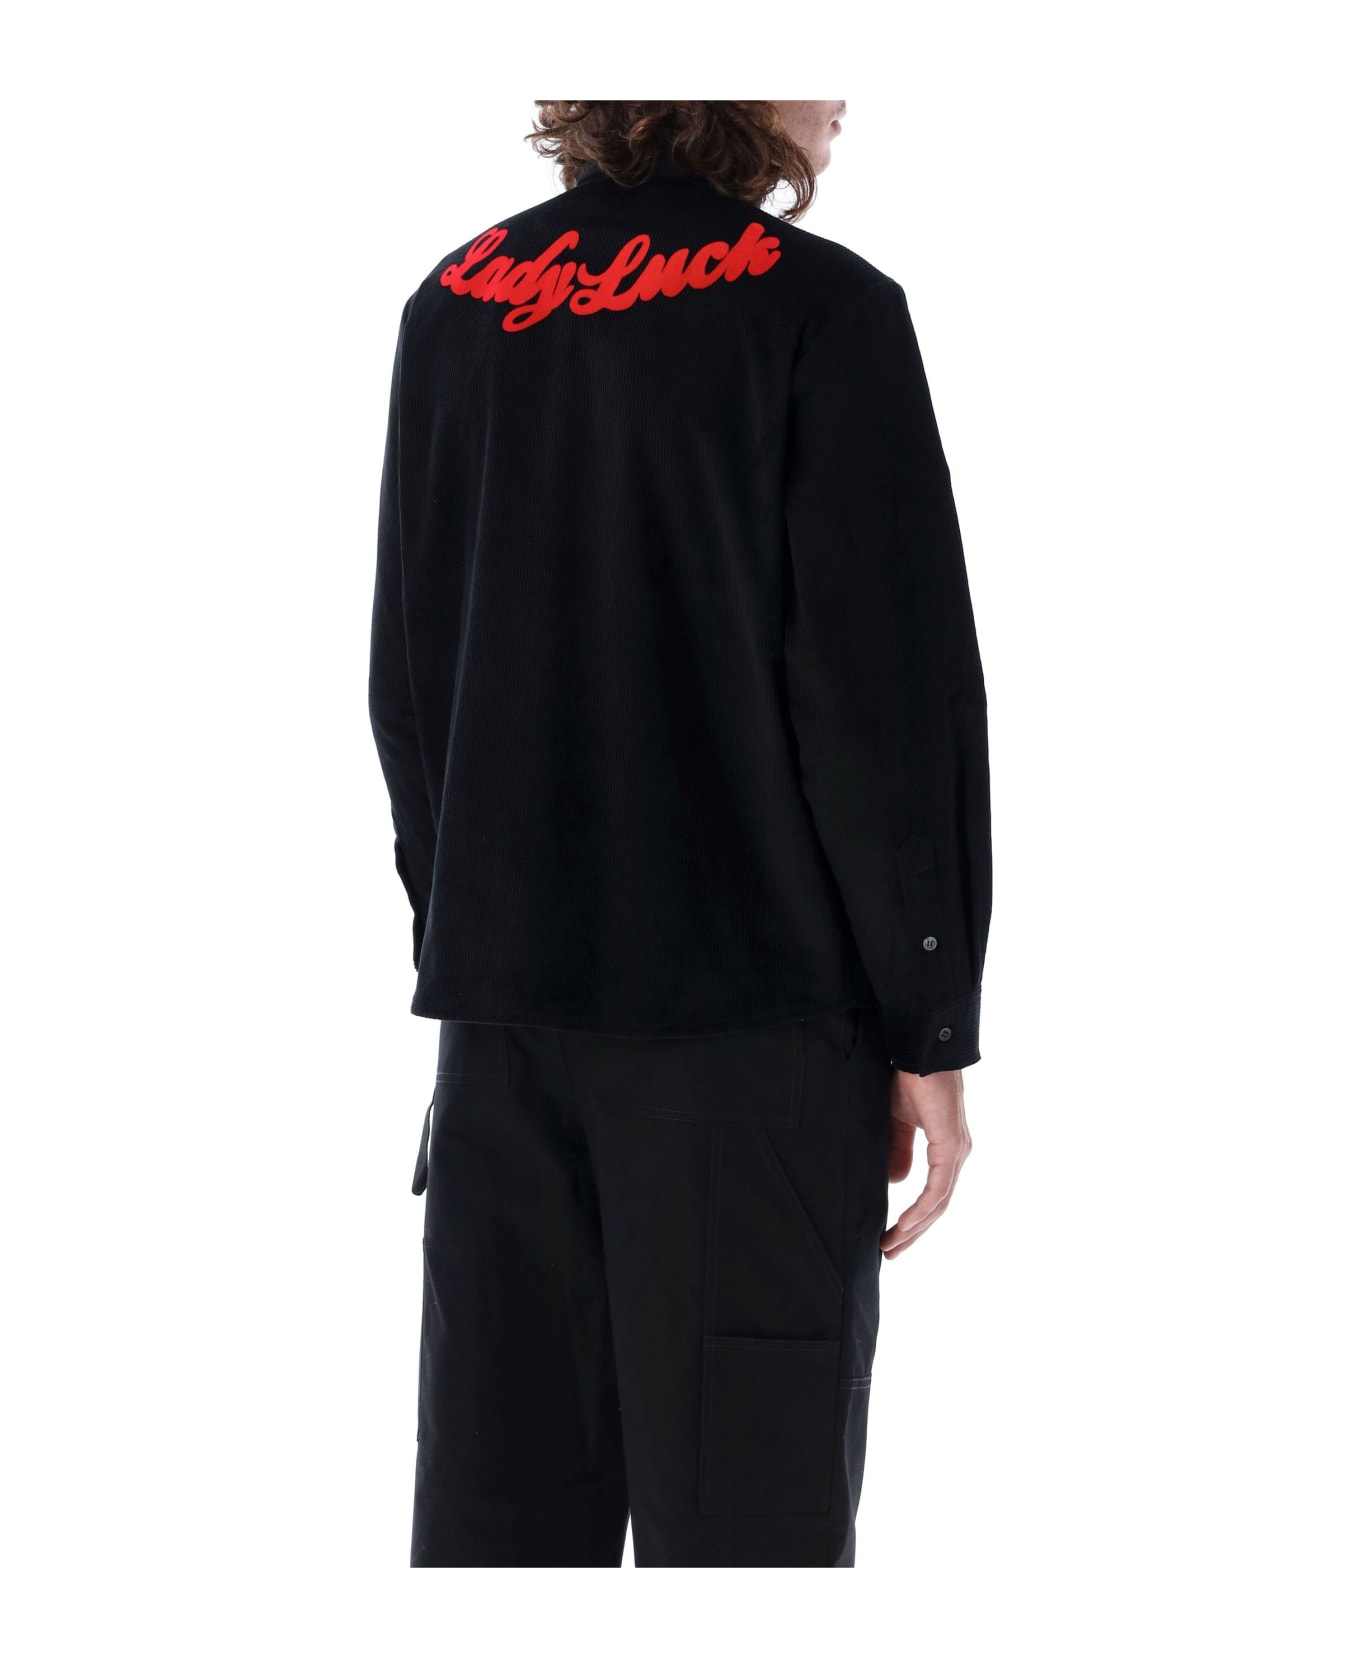 PACCBET Lady Luck Overshirt - BLACK シャツ